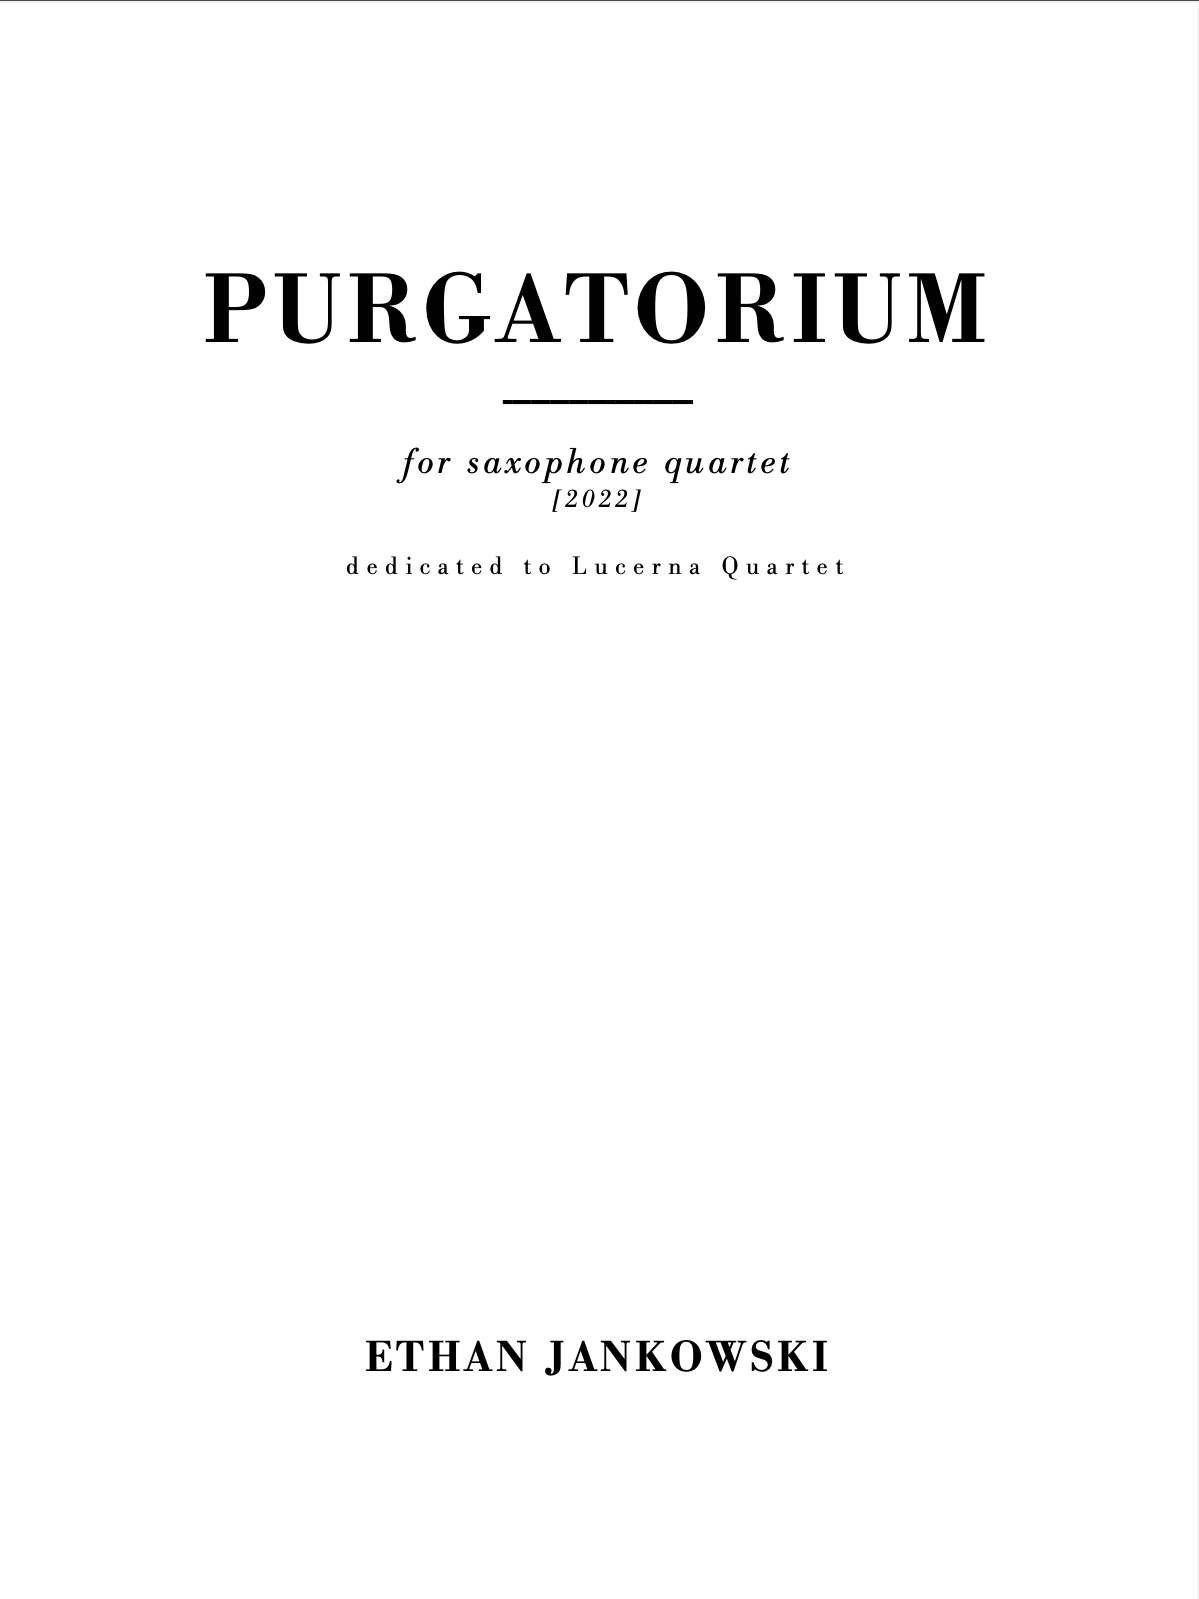 Purgatorium by Ethan Jankowski